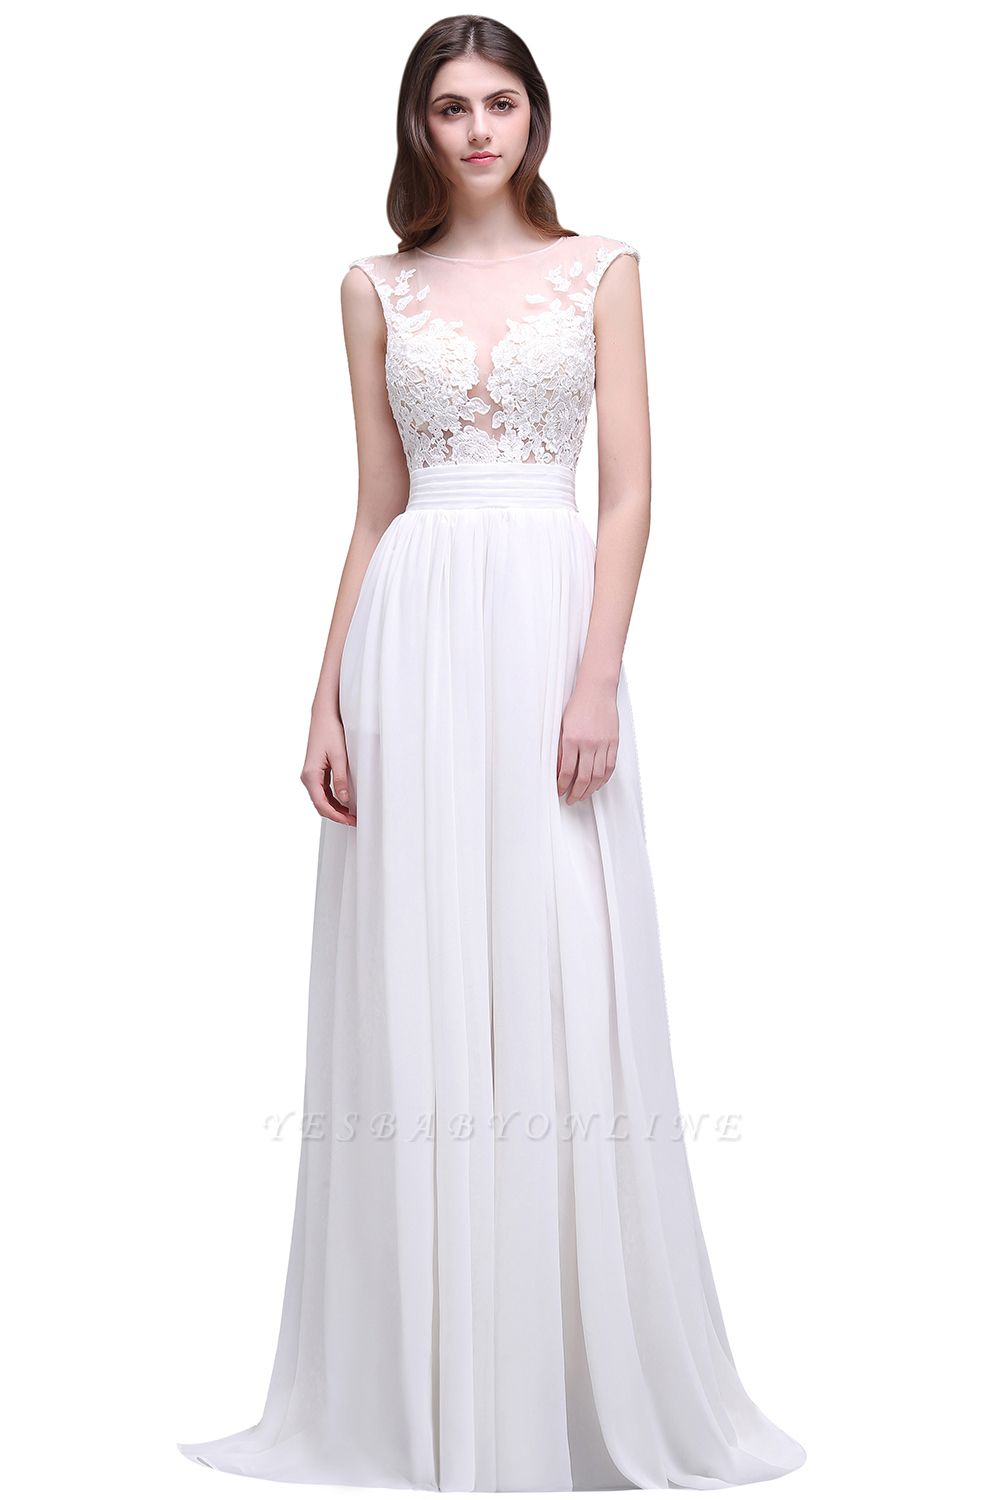 Elegant White Sheer Lace Chiffon Beach Wedding Dress